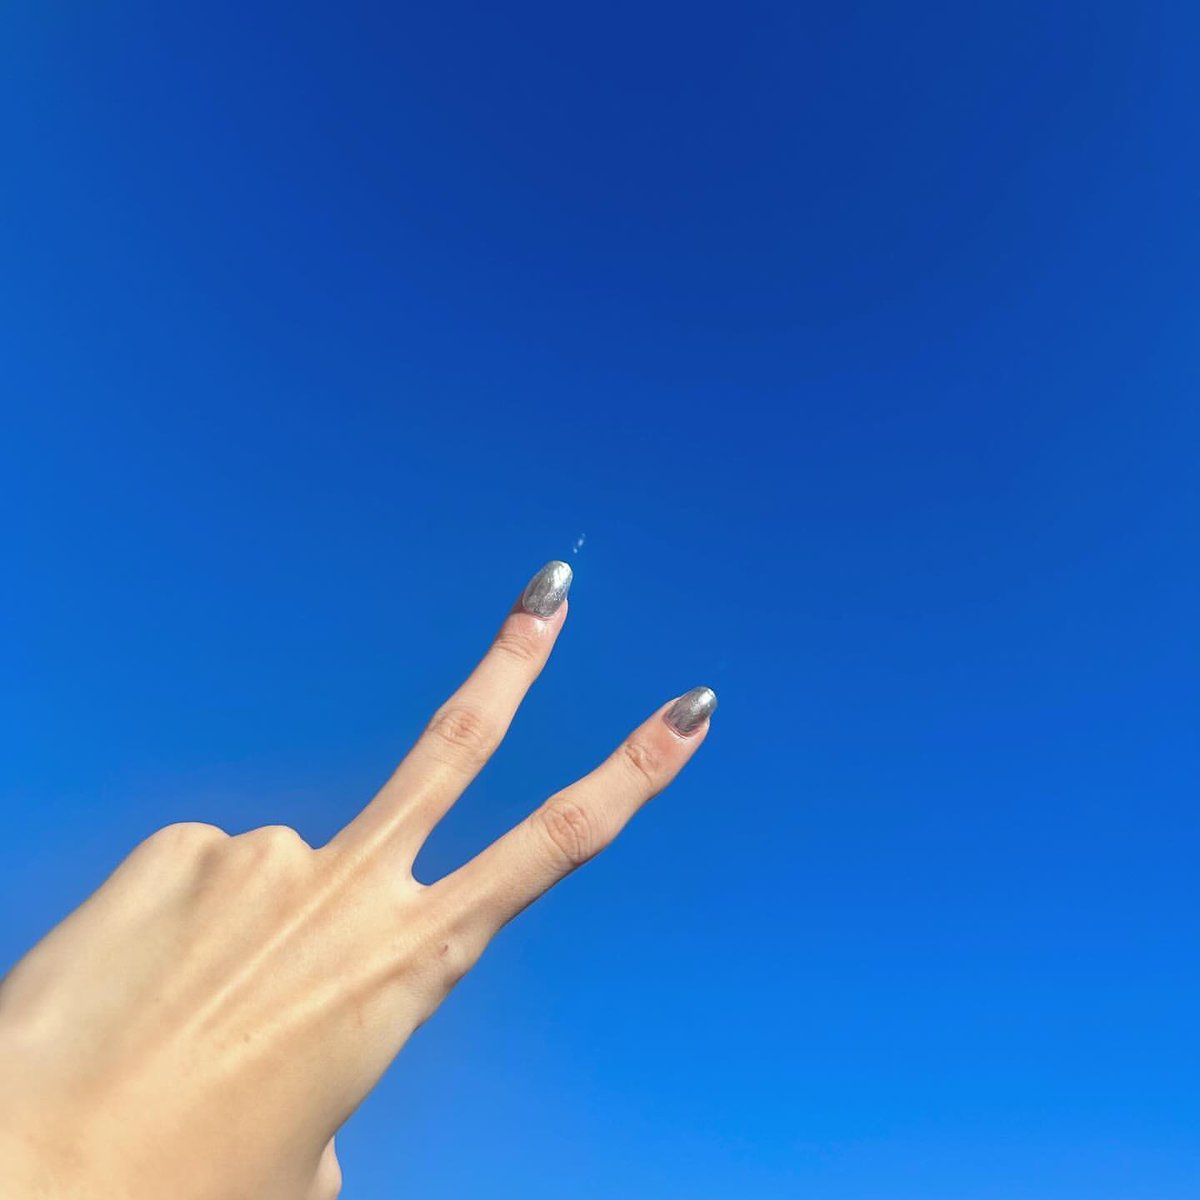 mai_ozeki.official .より
🐱<今日の空は澄んでて真っ青でした！🌞

…きれいな小関晴れ☀️！！！！
(指先のは飛行機かと思ったけど流石に違うか✈️)
#小関舞 #青空 #小関晴れ
instagram.com/p/C0l-zz4vuSS/